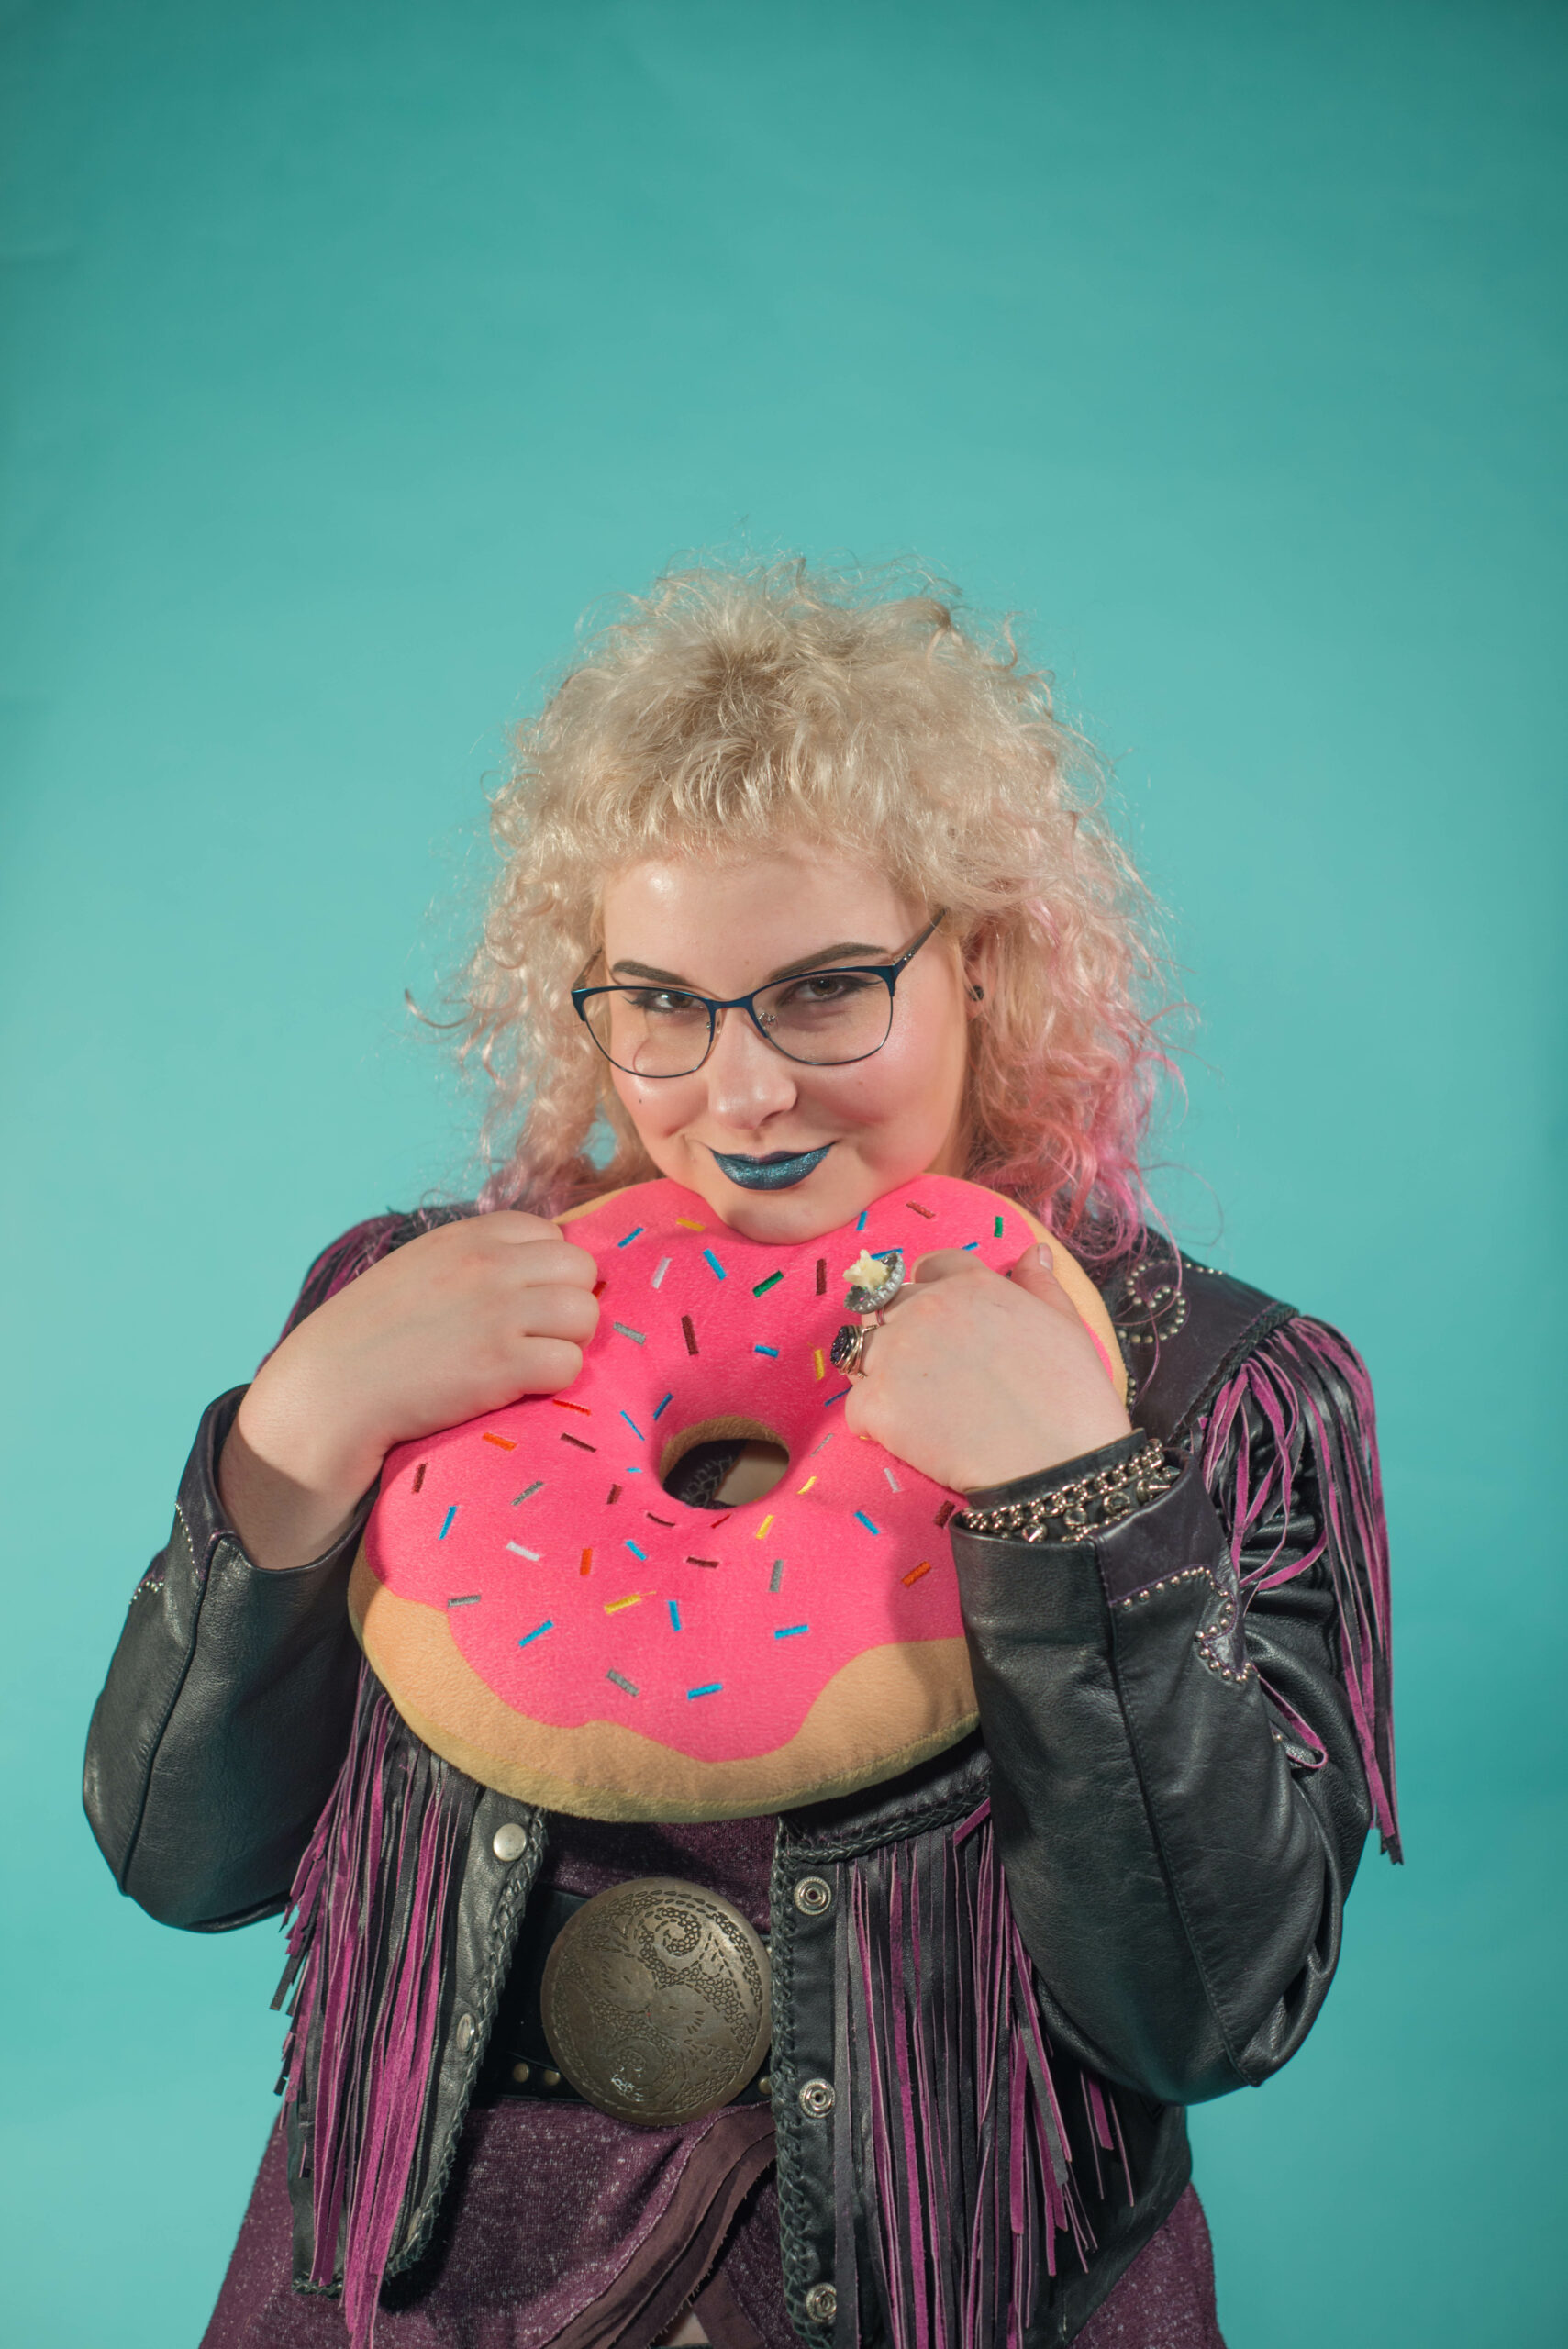 student hold soft donut sculpture smiling